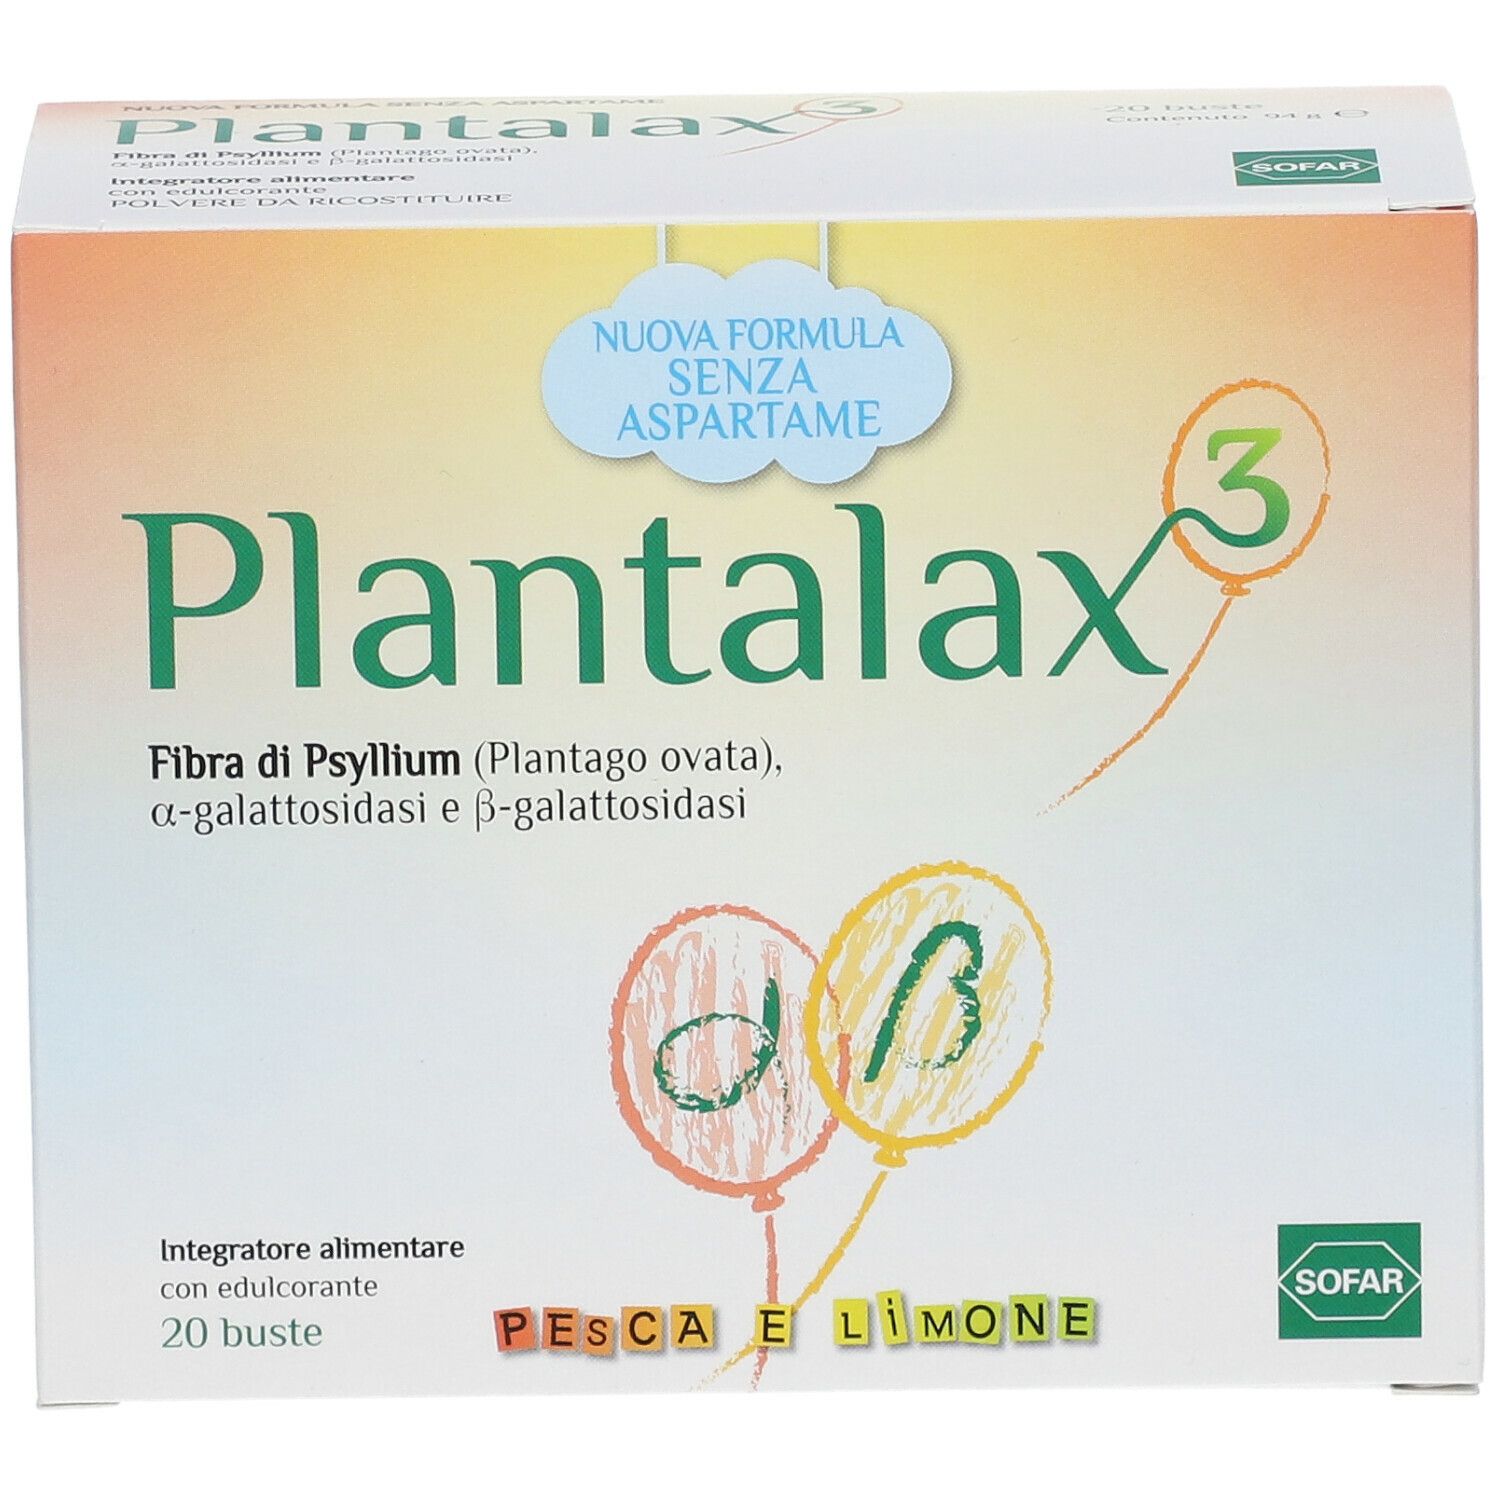 Plantalax® Bustine